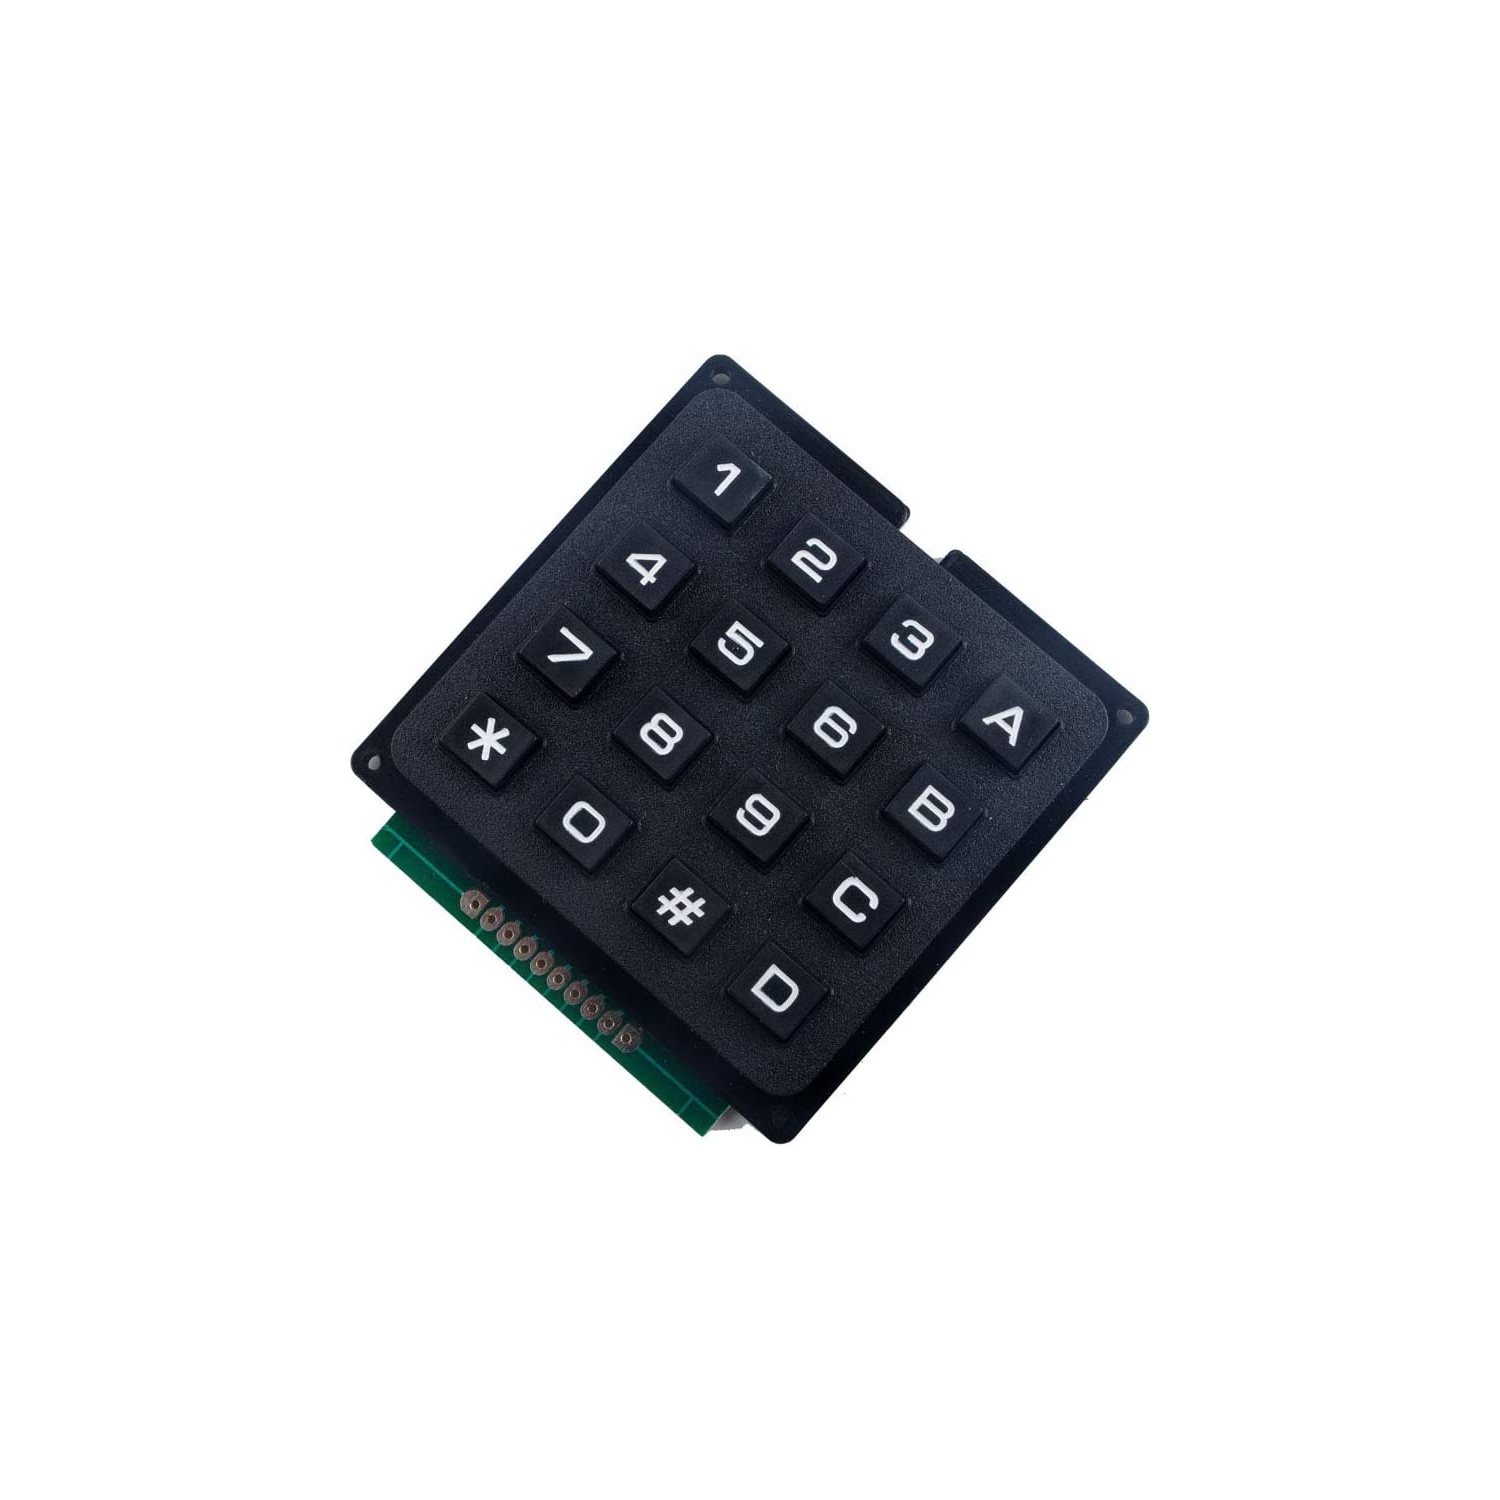 4x4 Matrix Membrane Keypad 16 Key Keyboard Module Array Switch for Arduino UNO R3